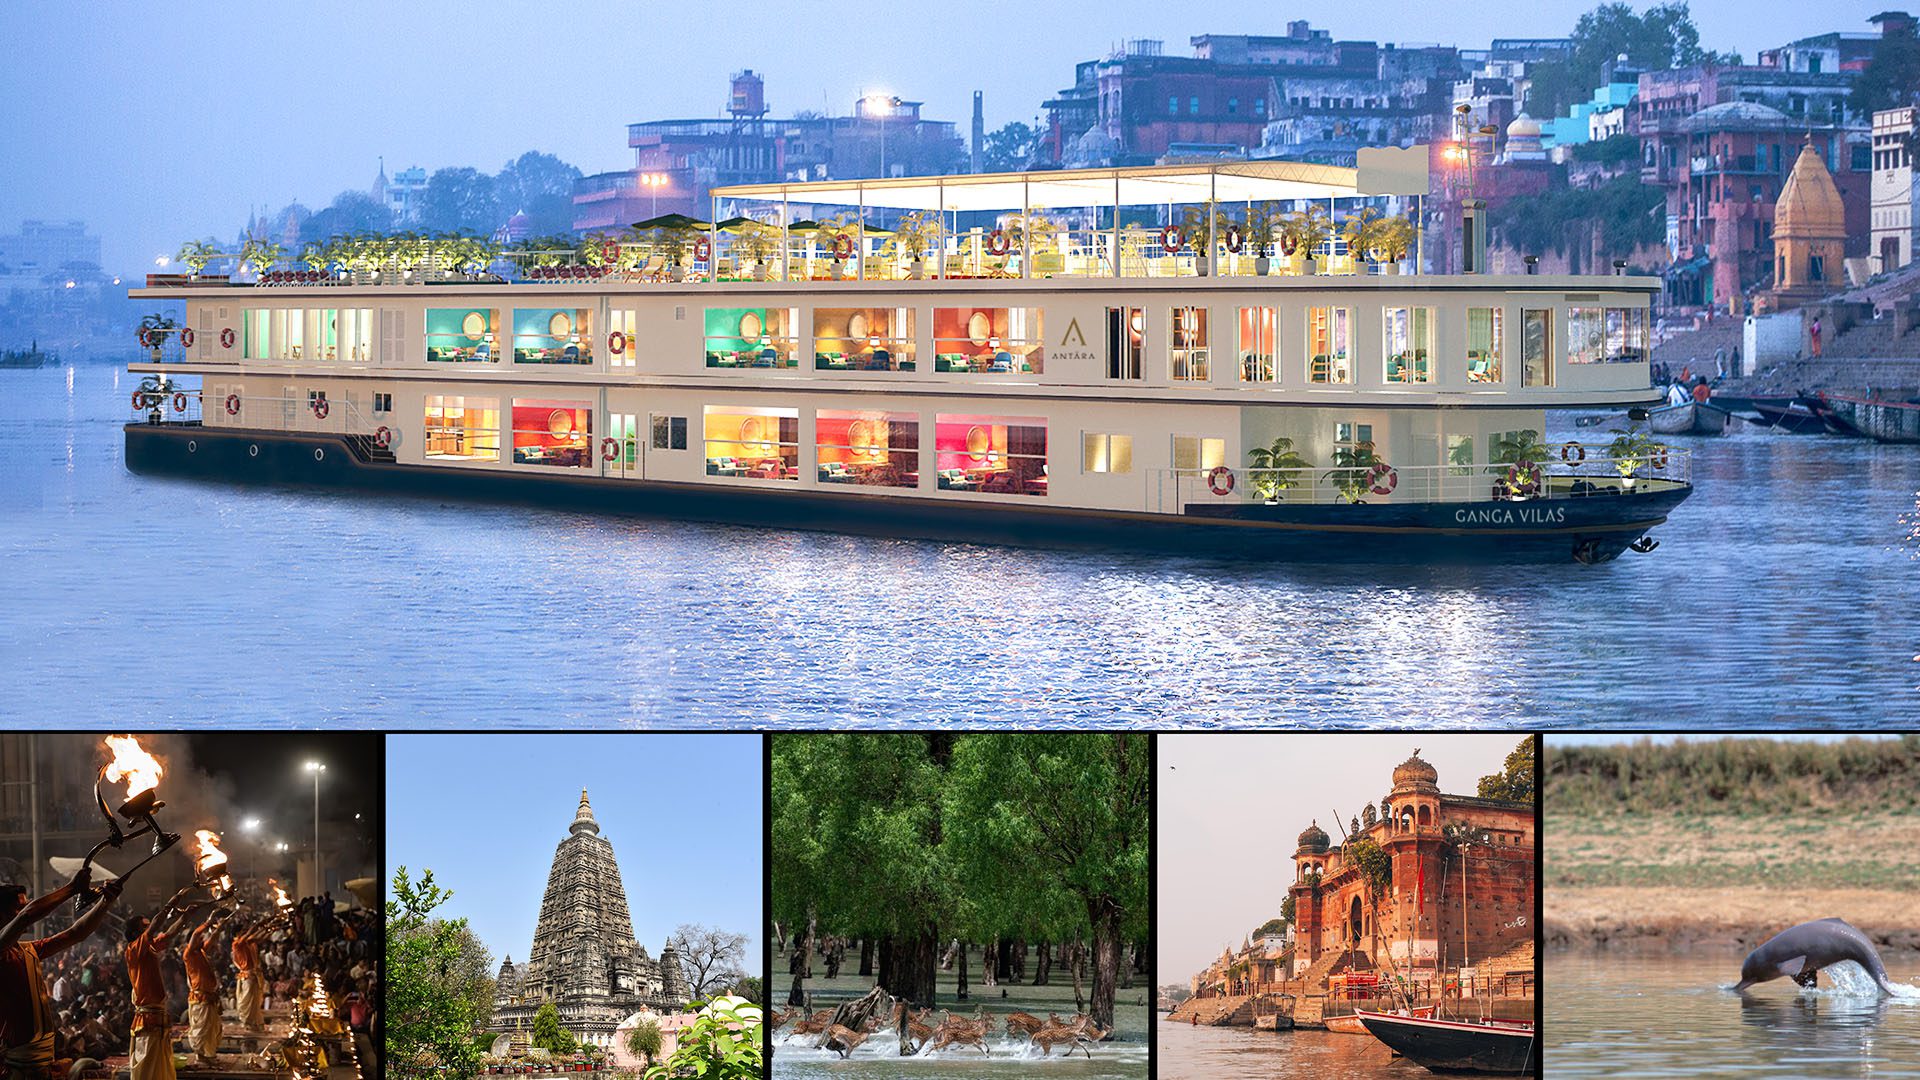 India's new luxury river cruise: Antara Cruises’s MV Ganga Vilas